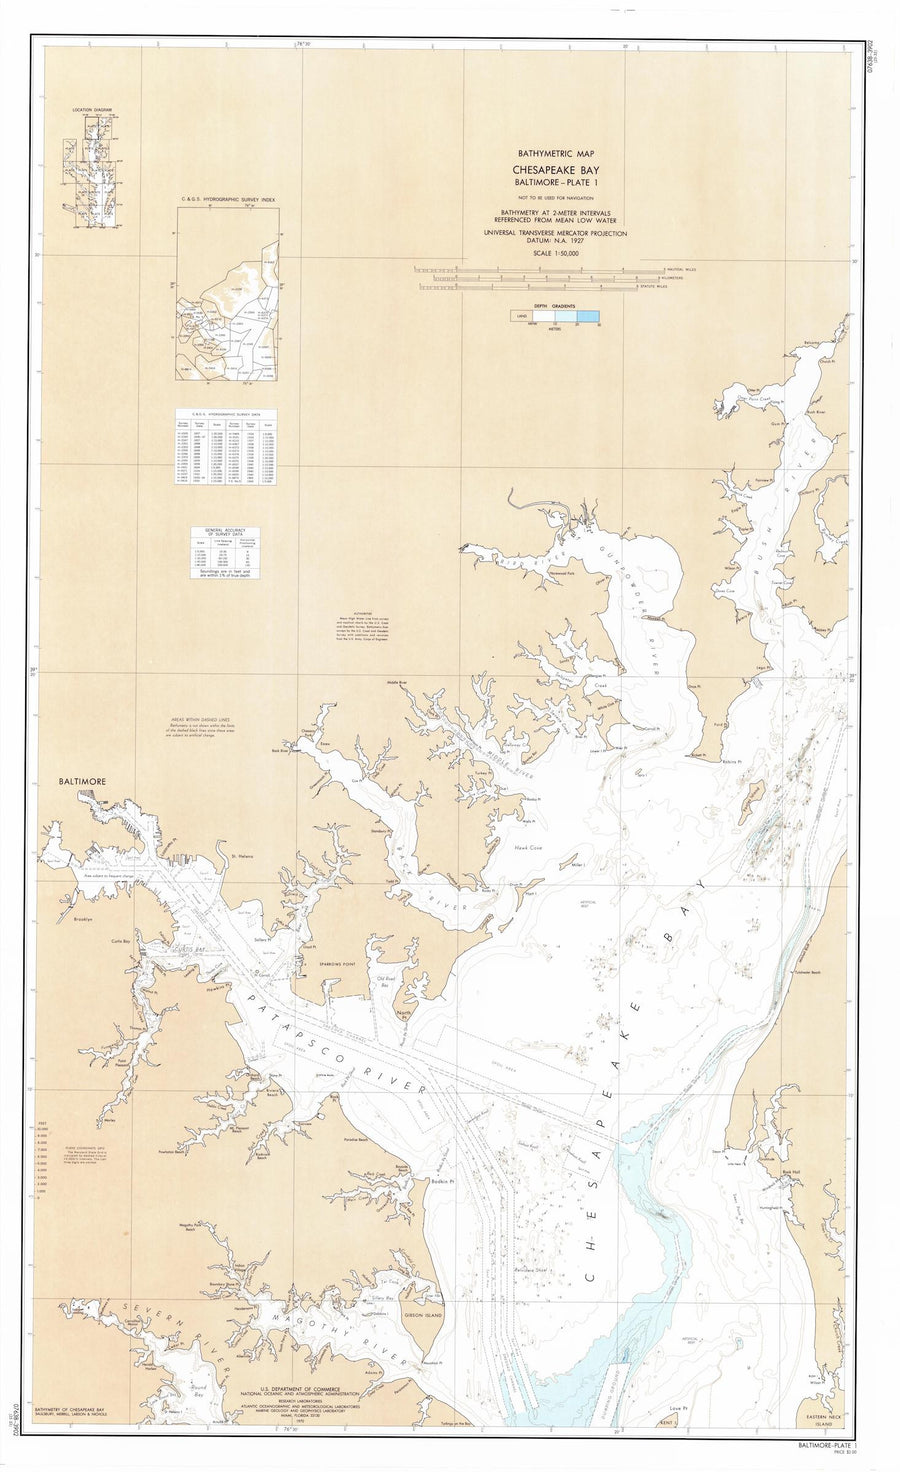 Chesapeake Bay Bathymetric Map - PLATE 1